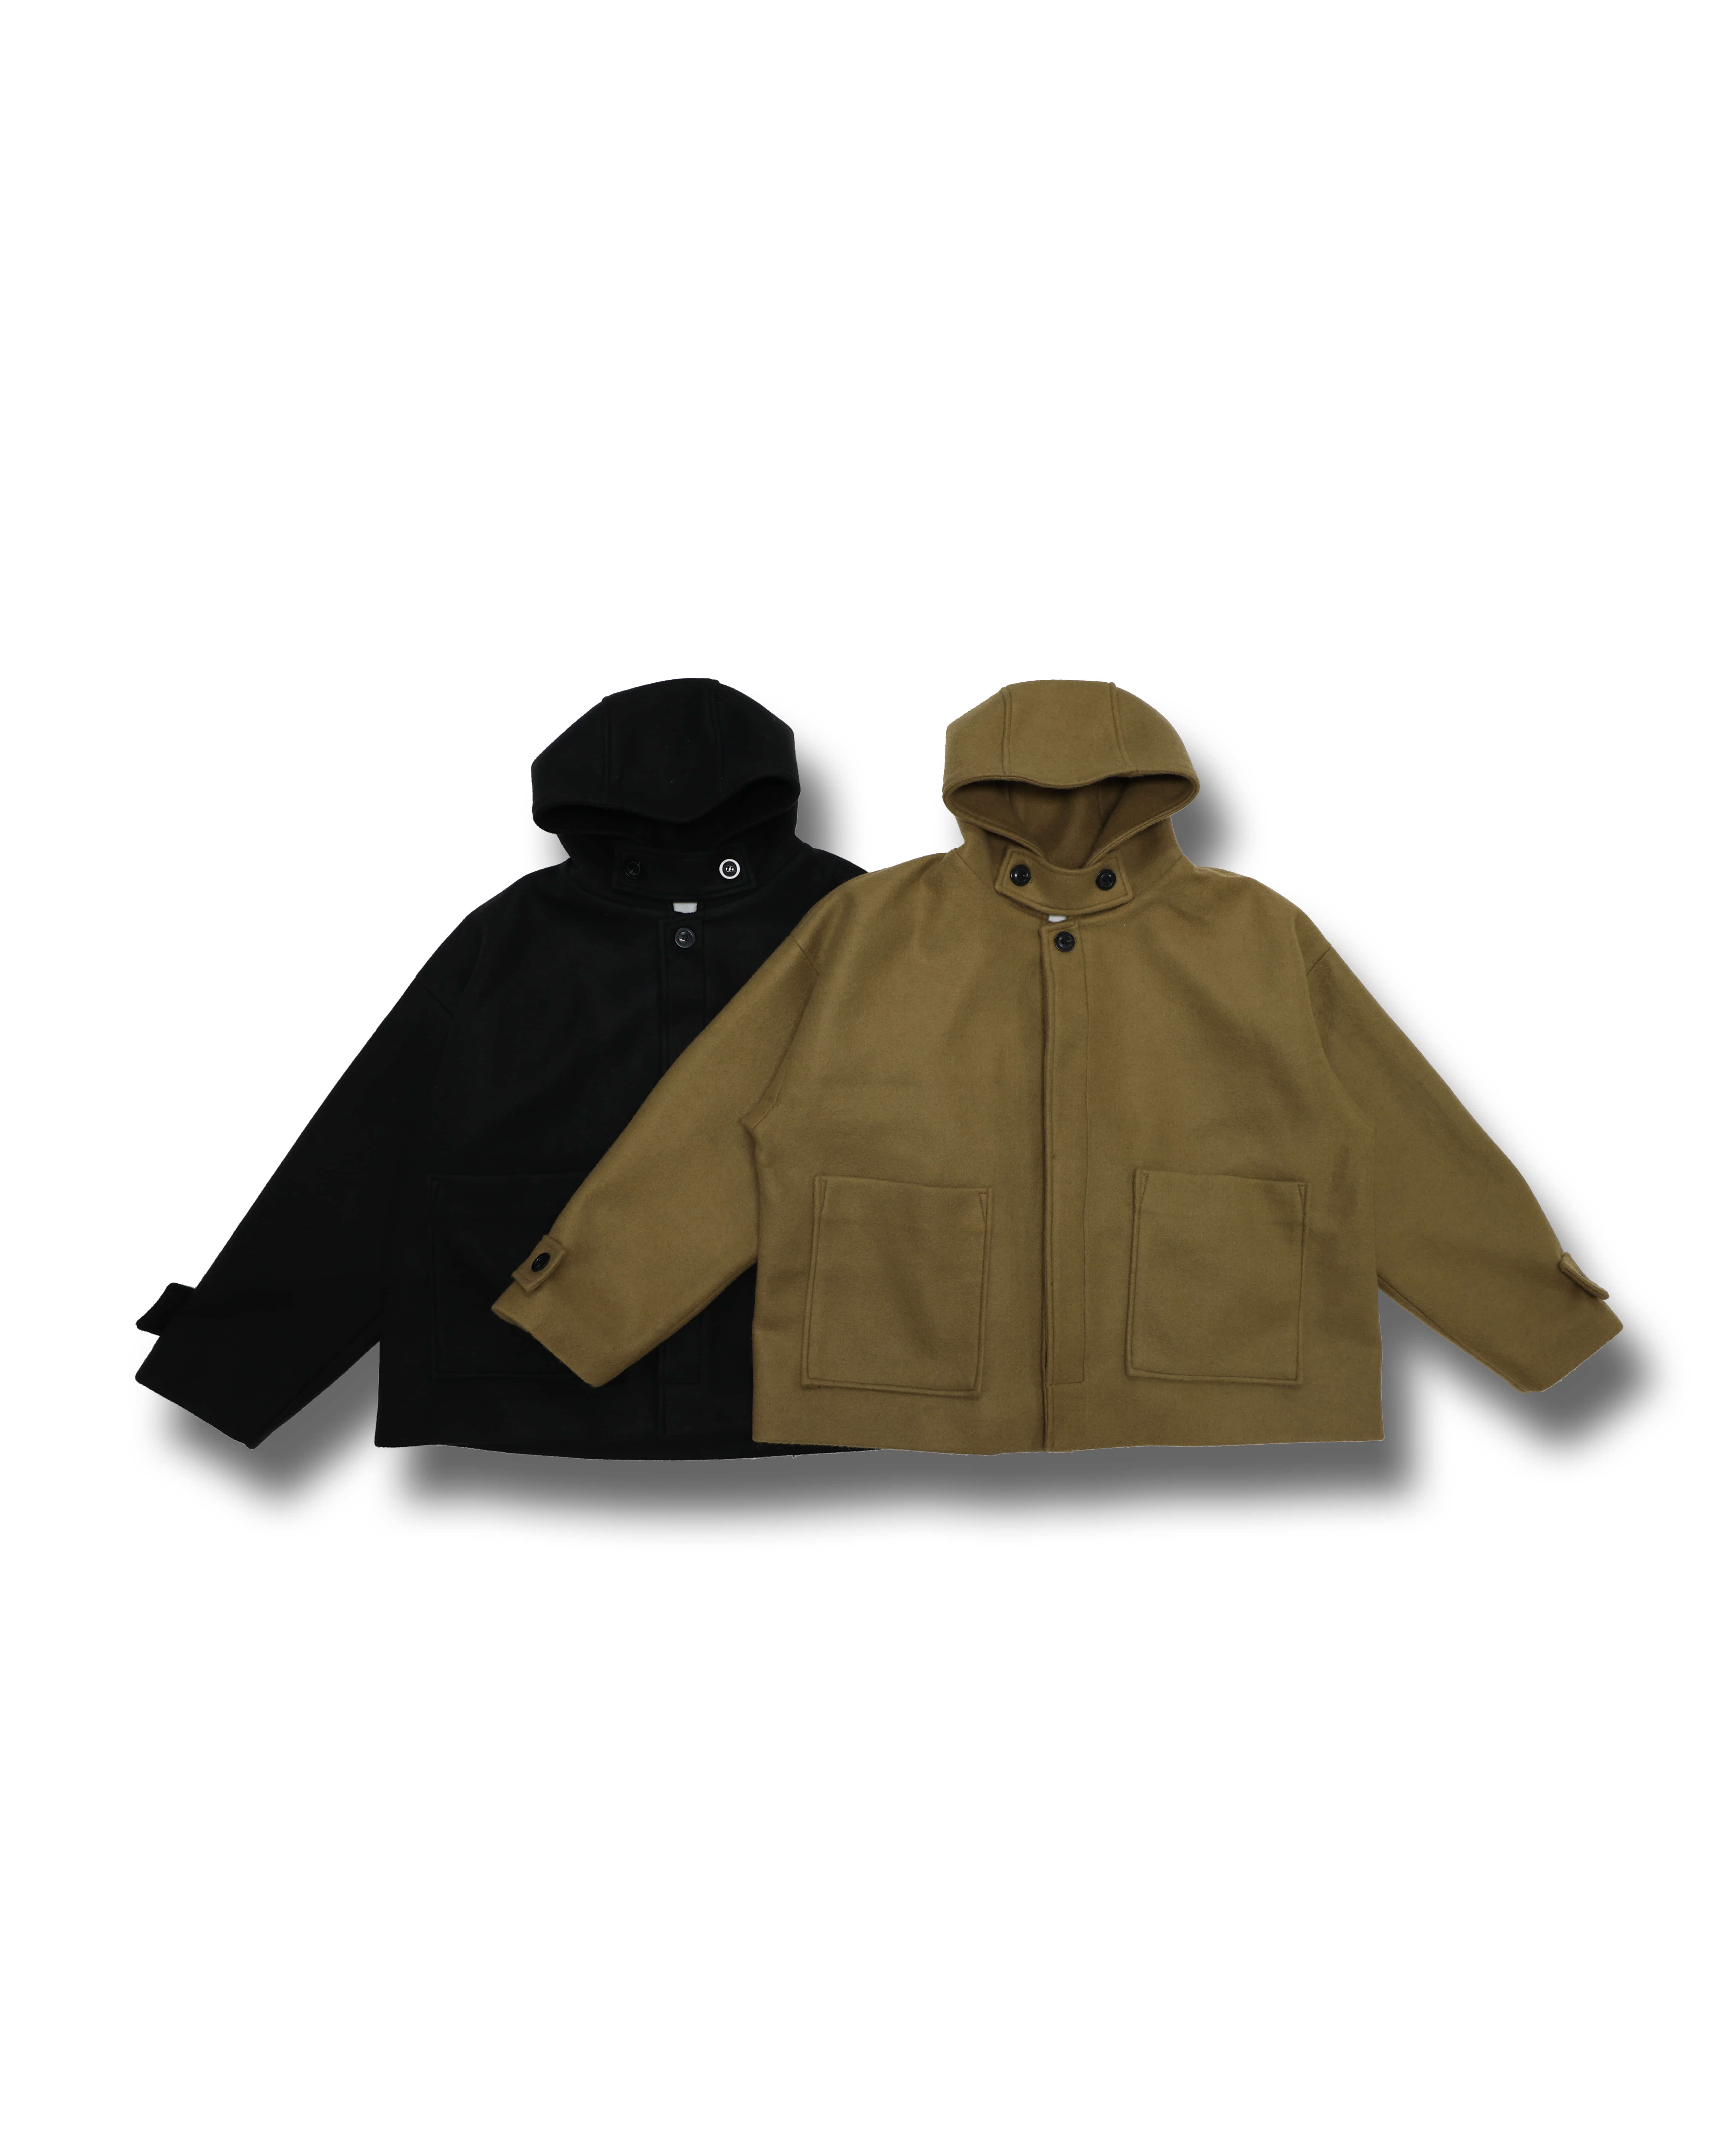 Wool Hoodied Pocket Coat (Black/Camel)